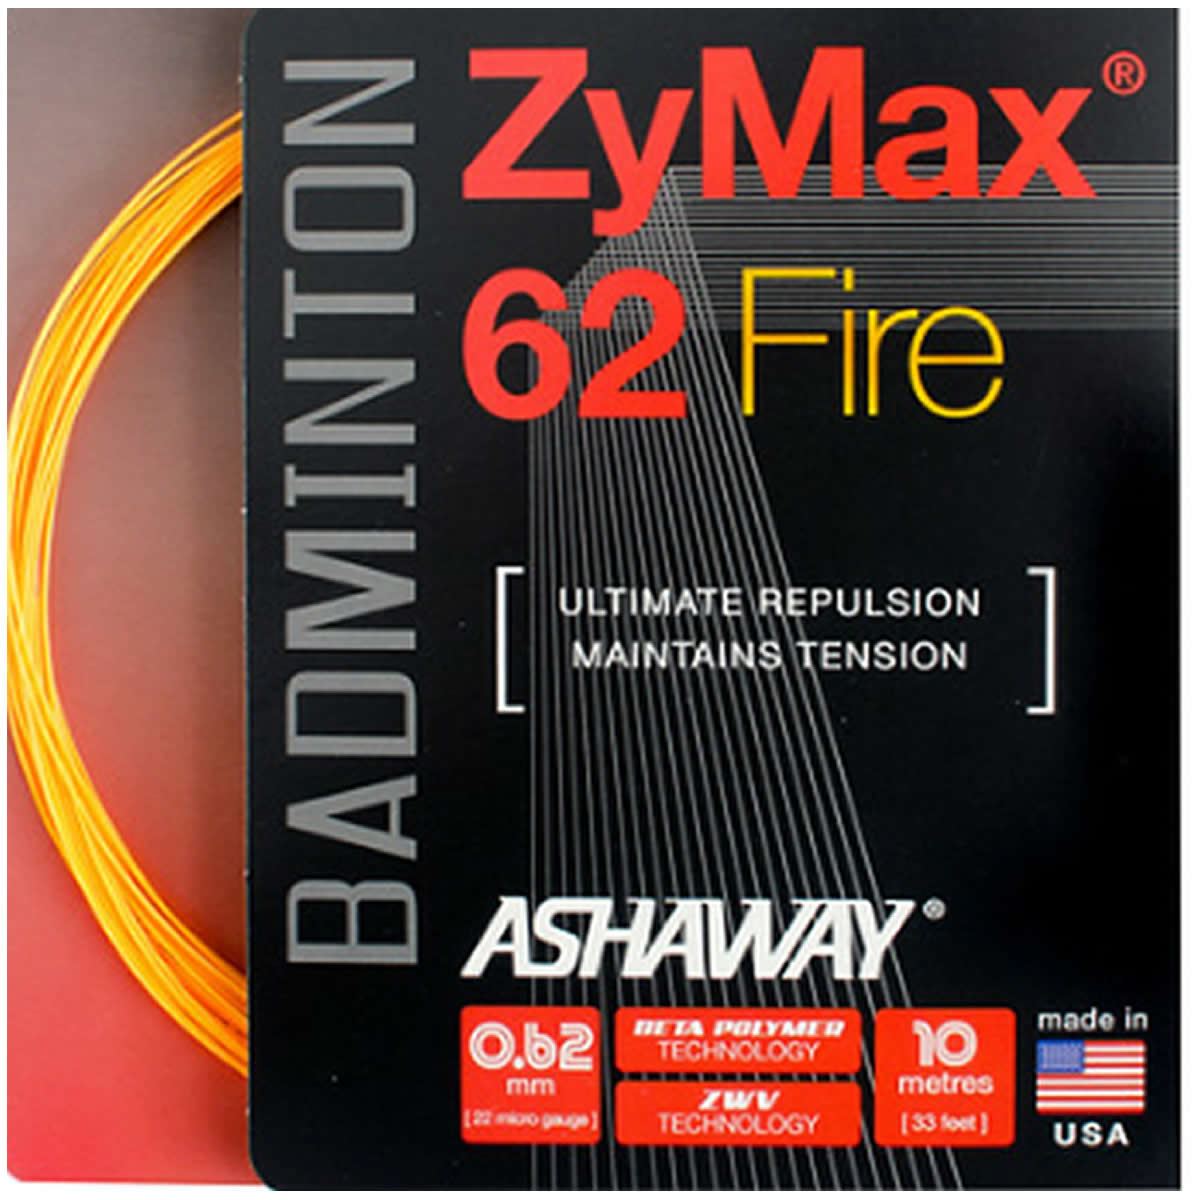 Ashaway Zymax 62 Fire Badminton String Orange  - 0.62MM - 10m Packet